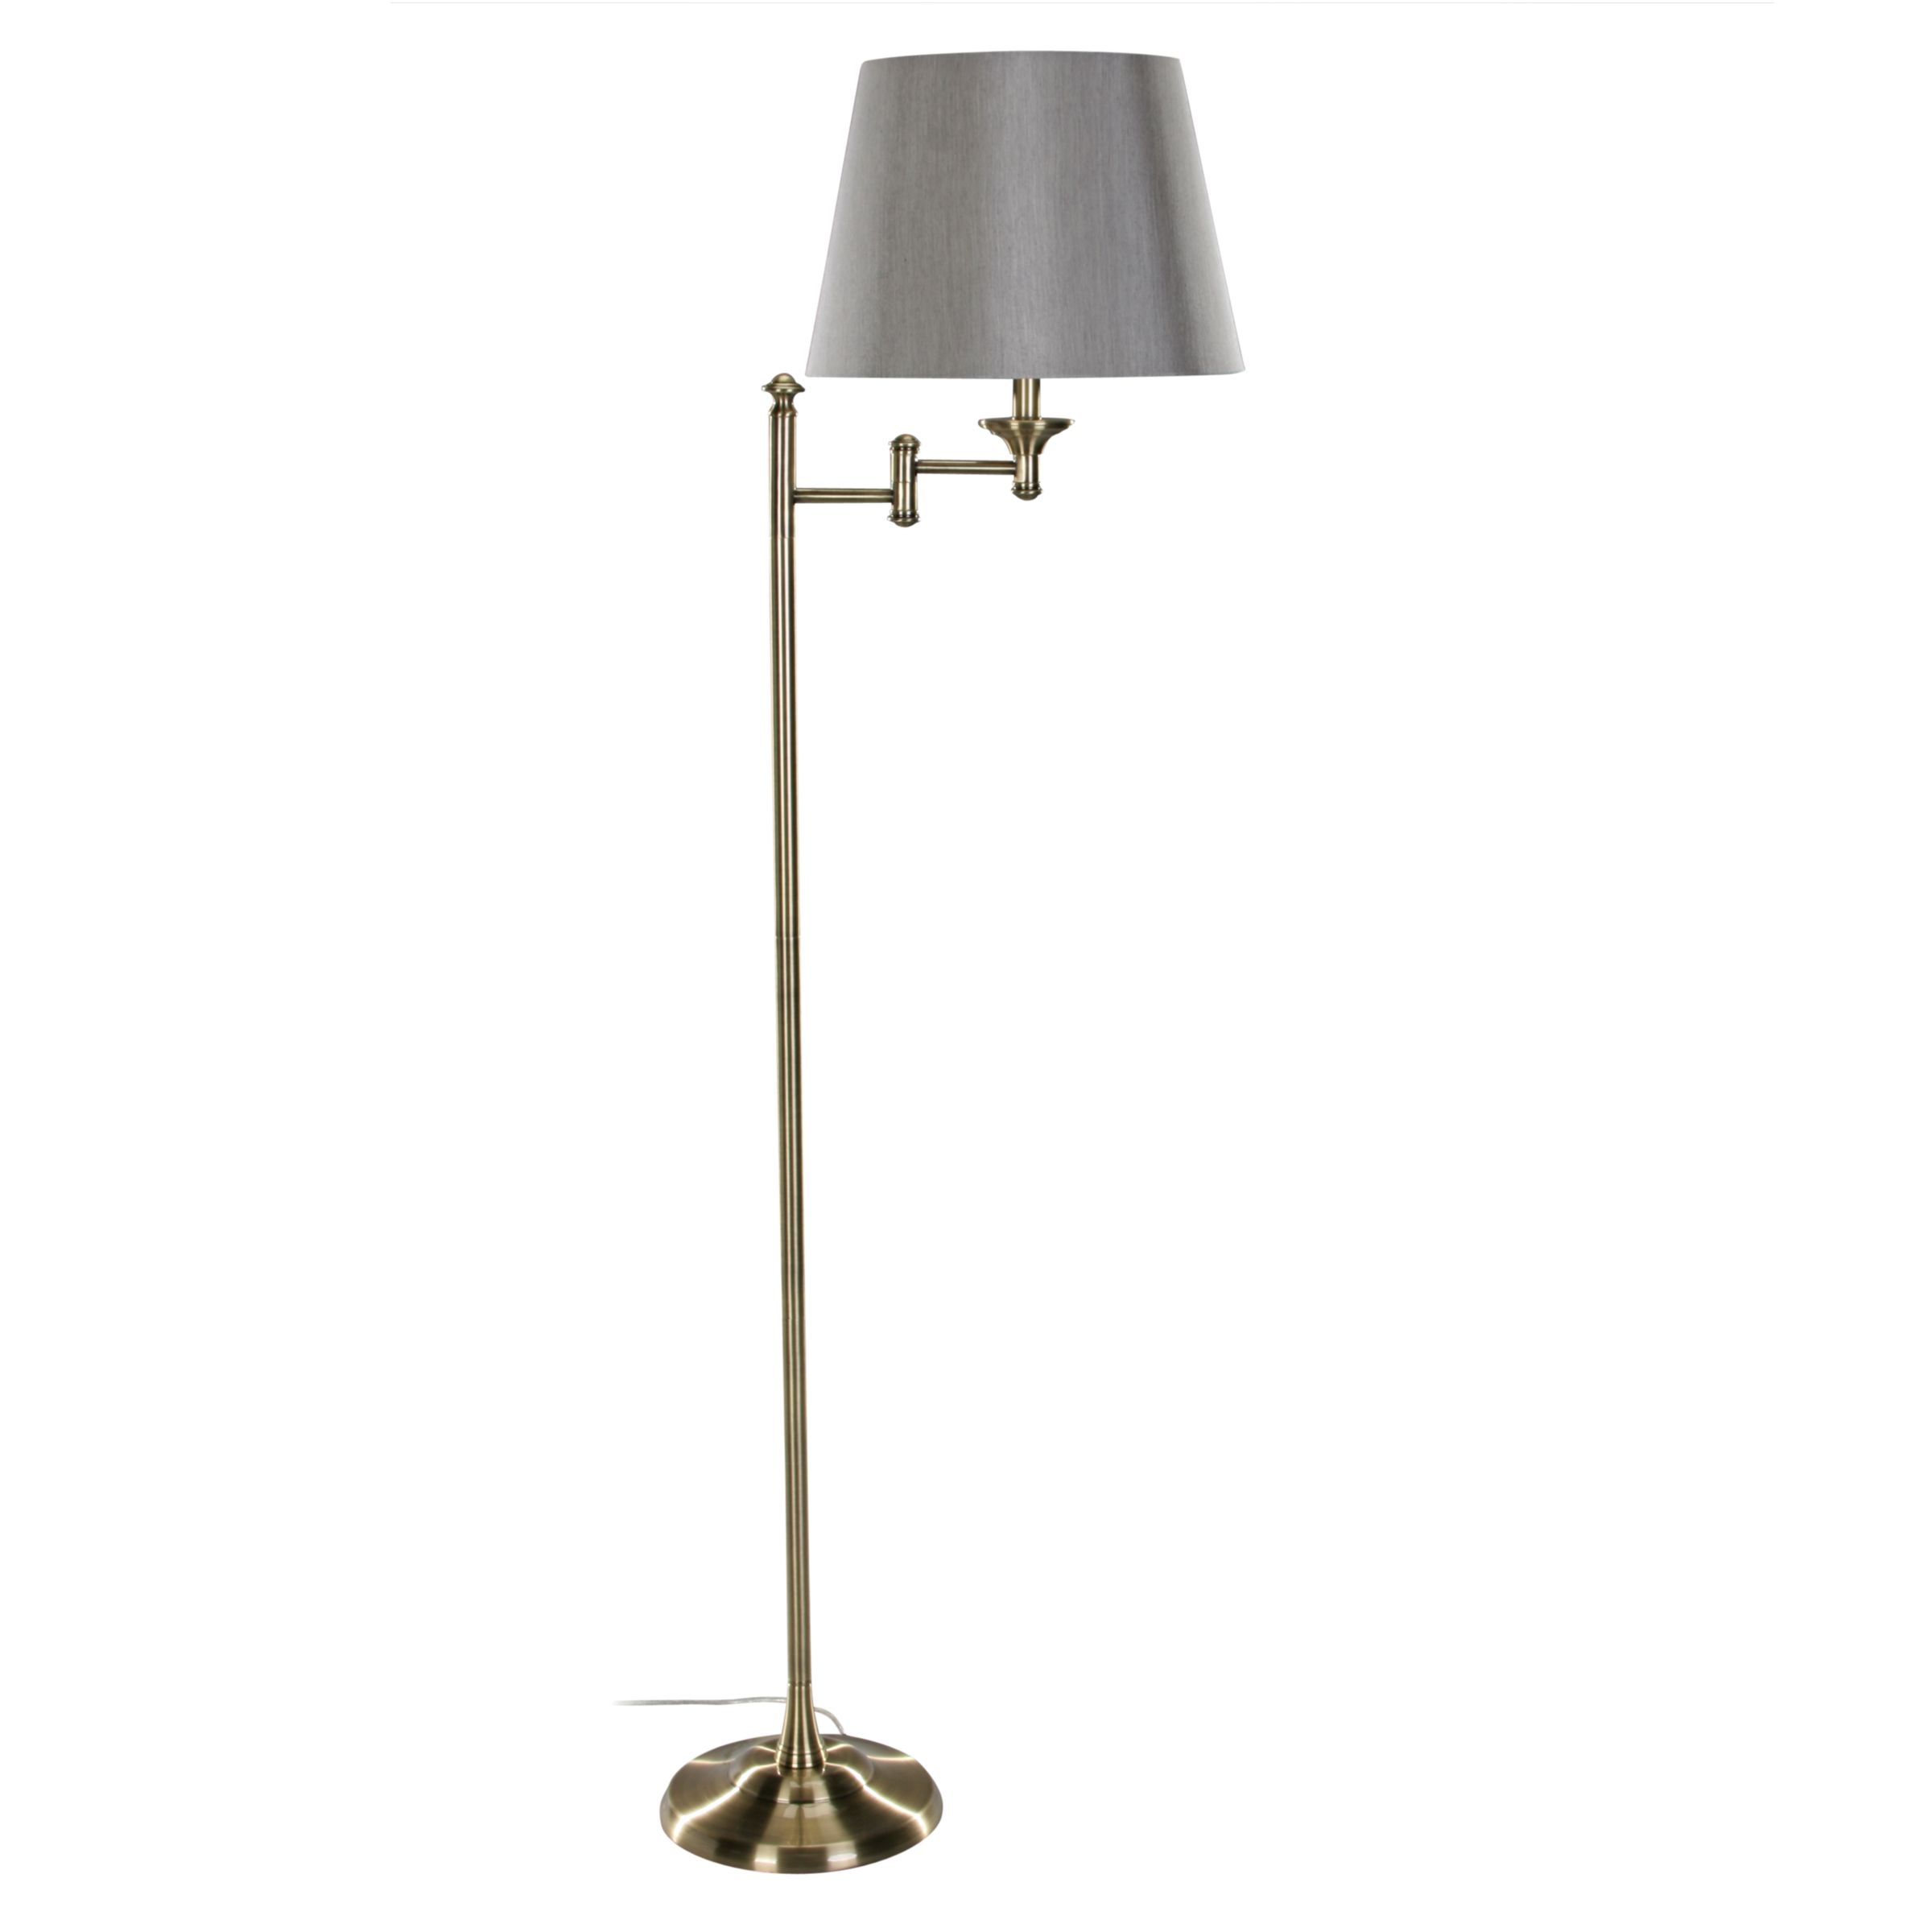 John Lewis Dominic Floor Lamp, Brass